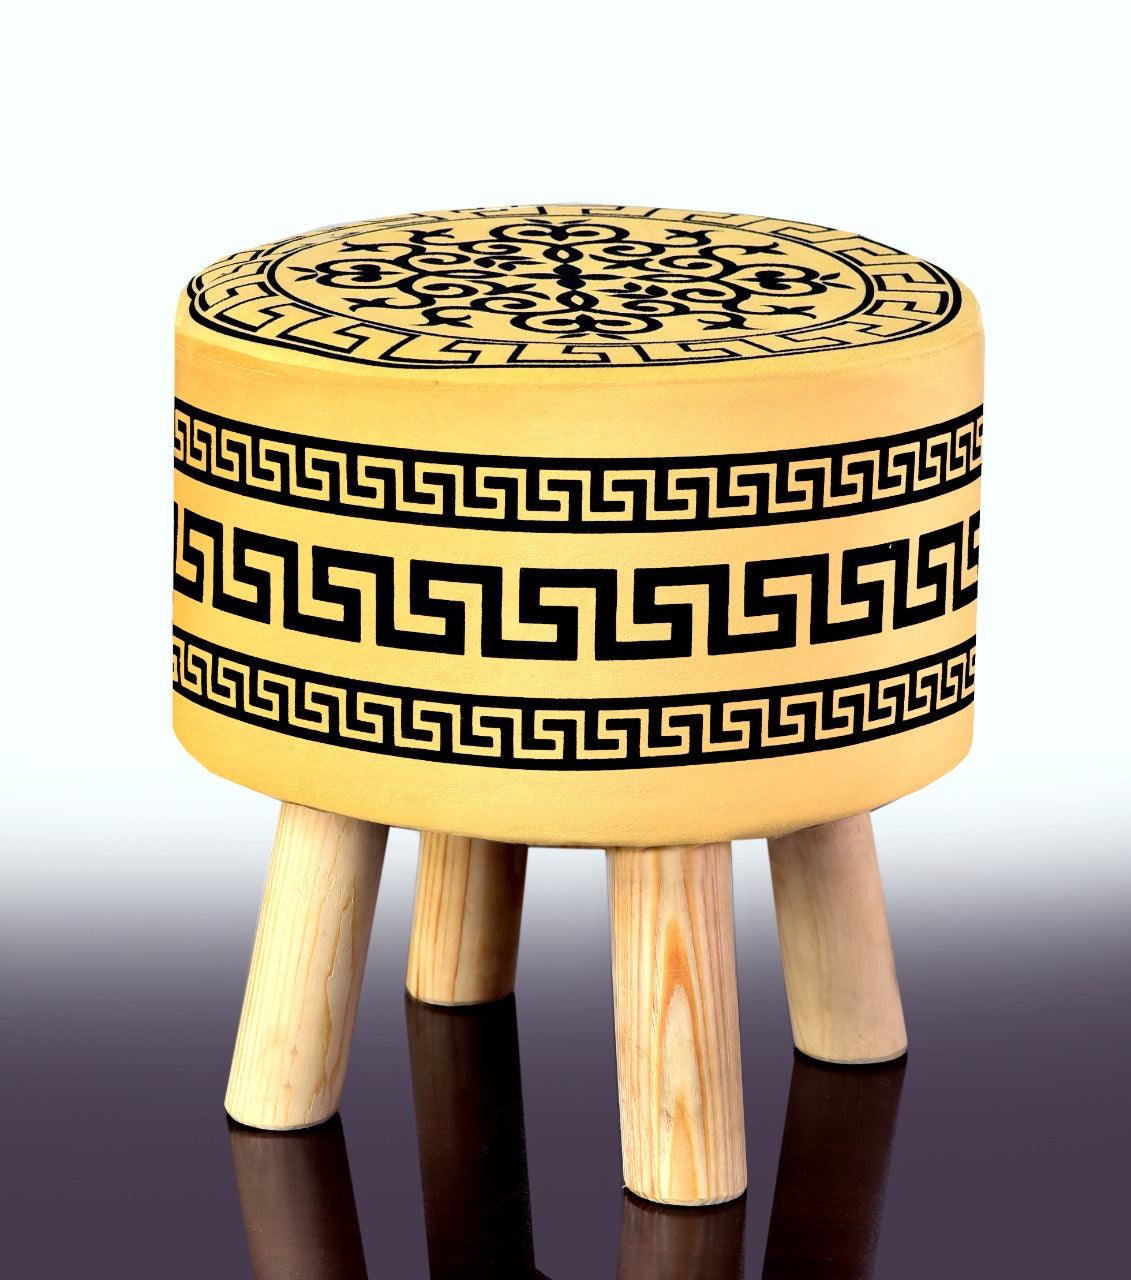 Wooden stool Vercase Design round shape-744 - 92Bedding